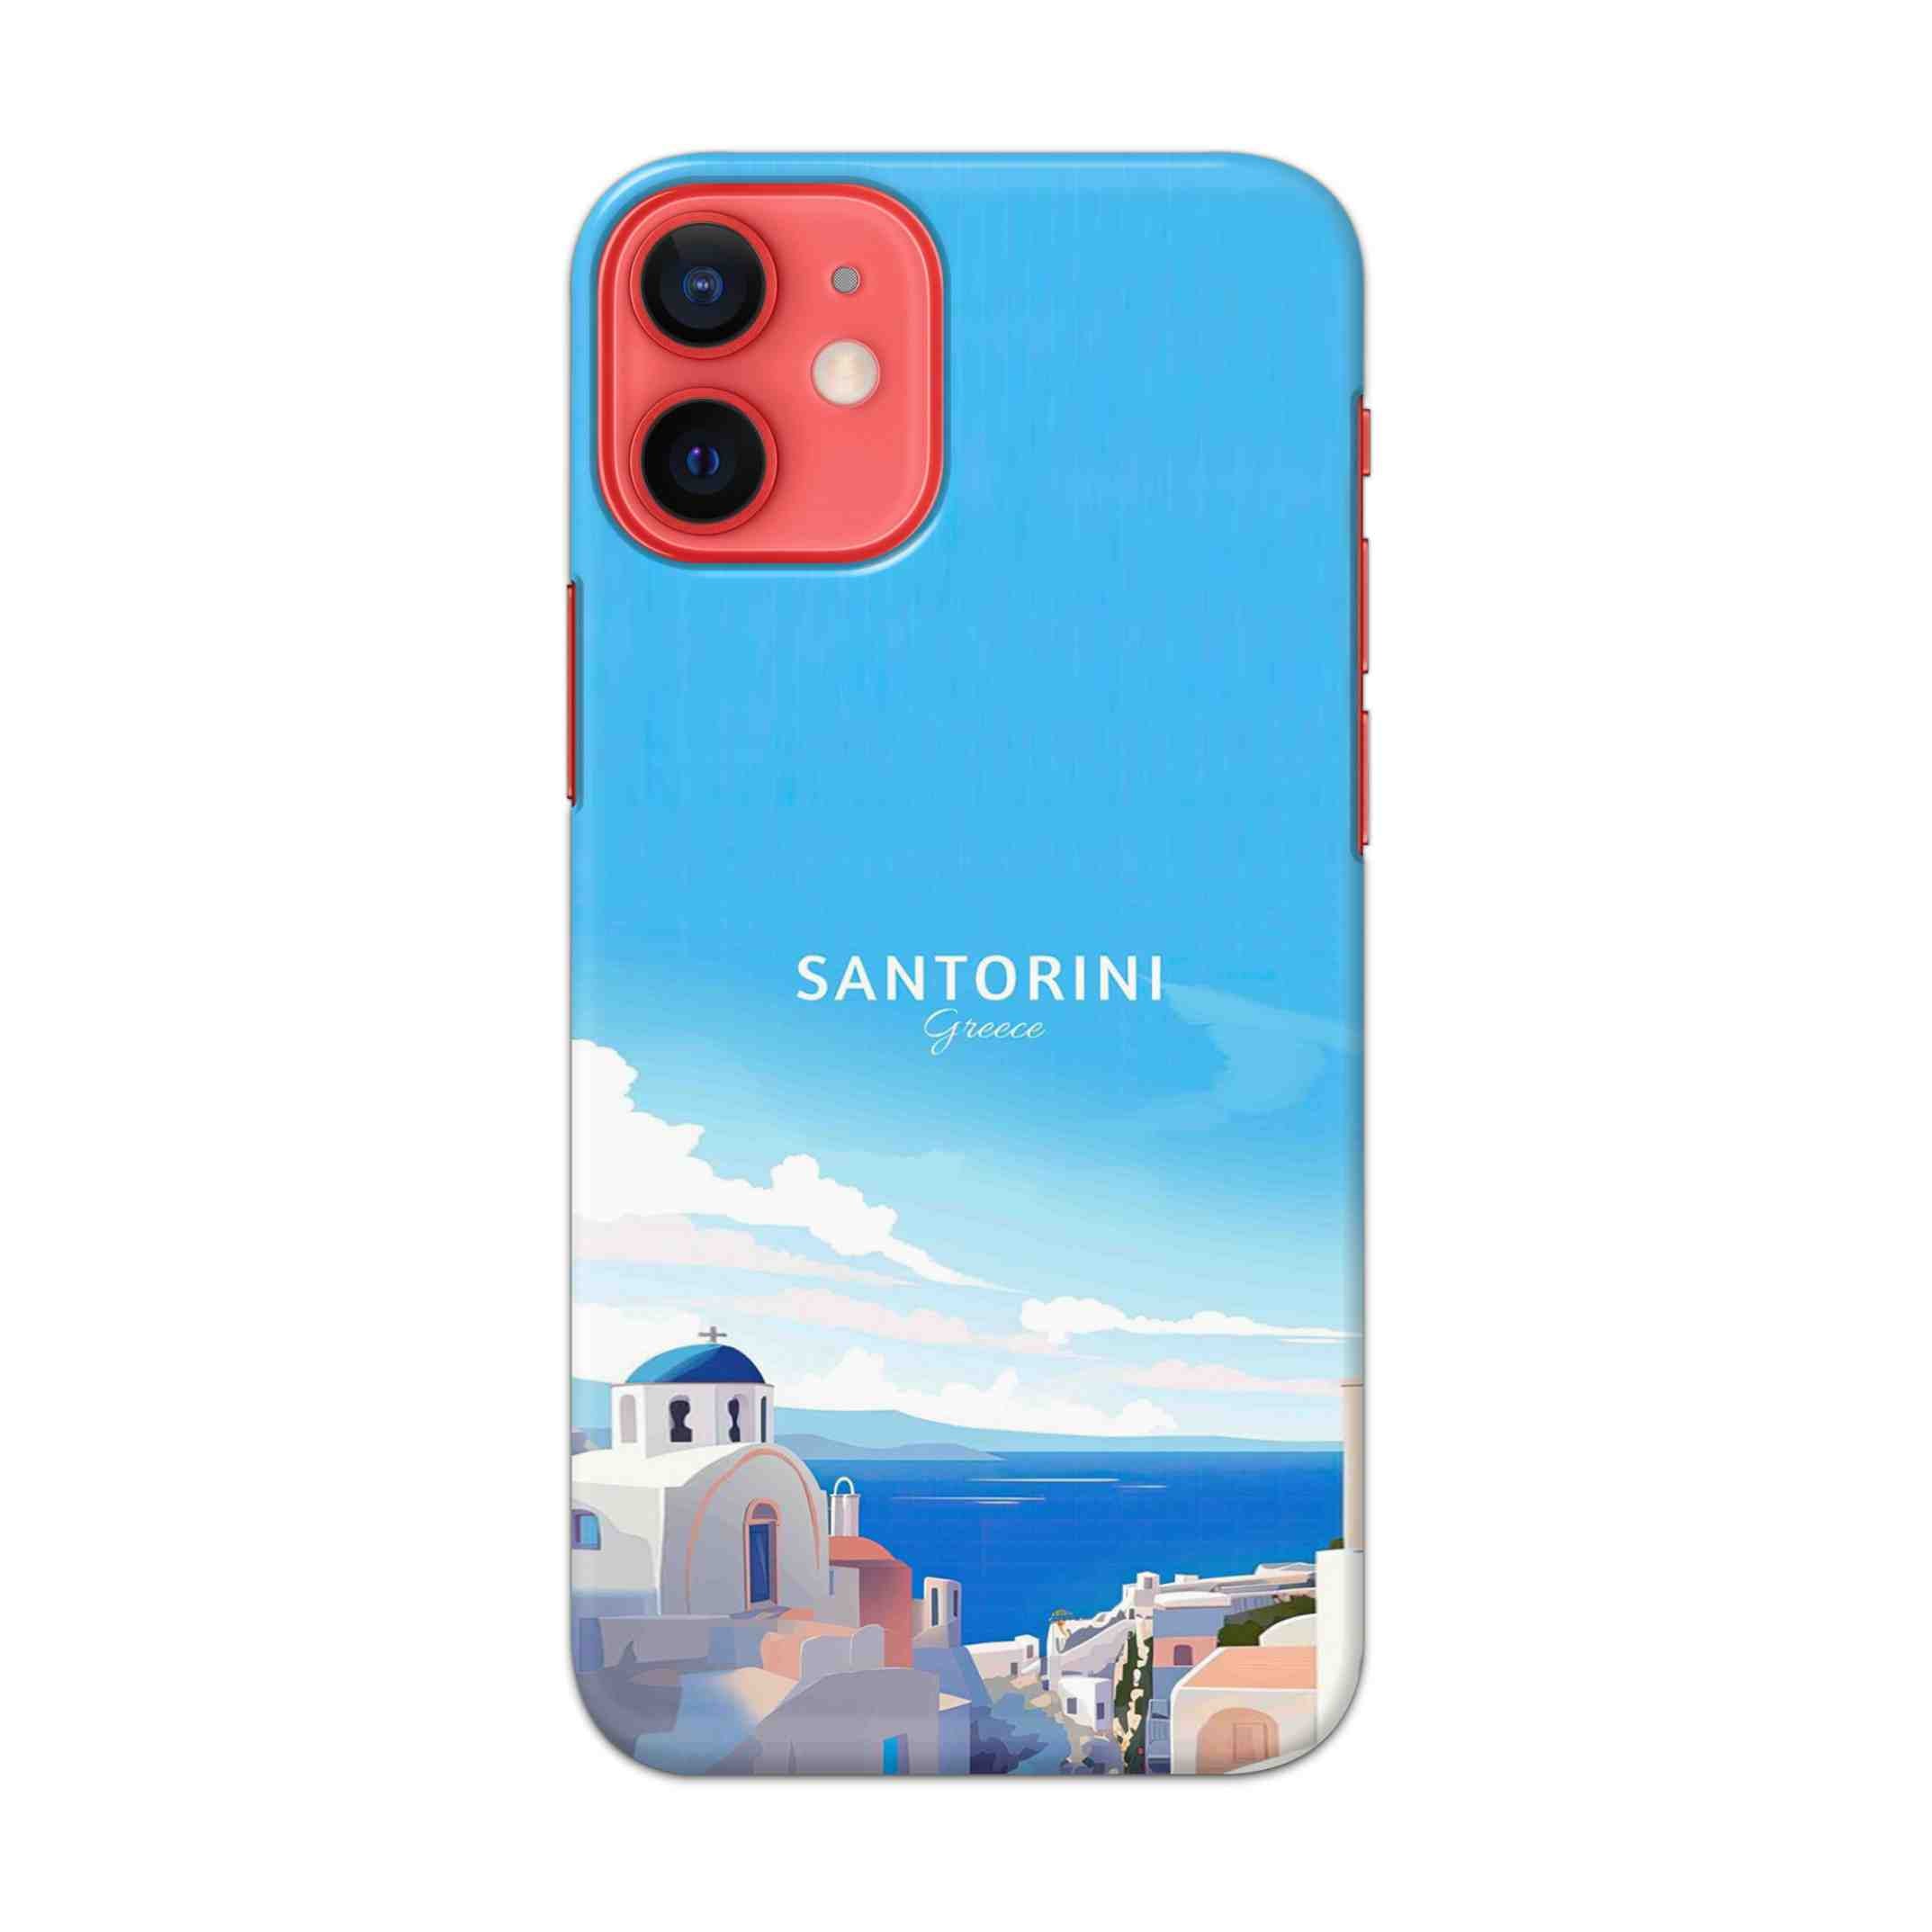 Buy Santorini Hard Back Mobile Phone Case/Cover For Apple iPhone 12 mini Online